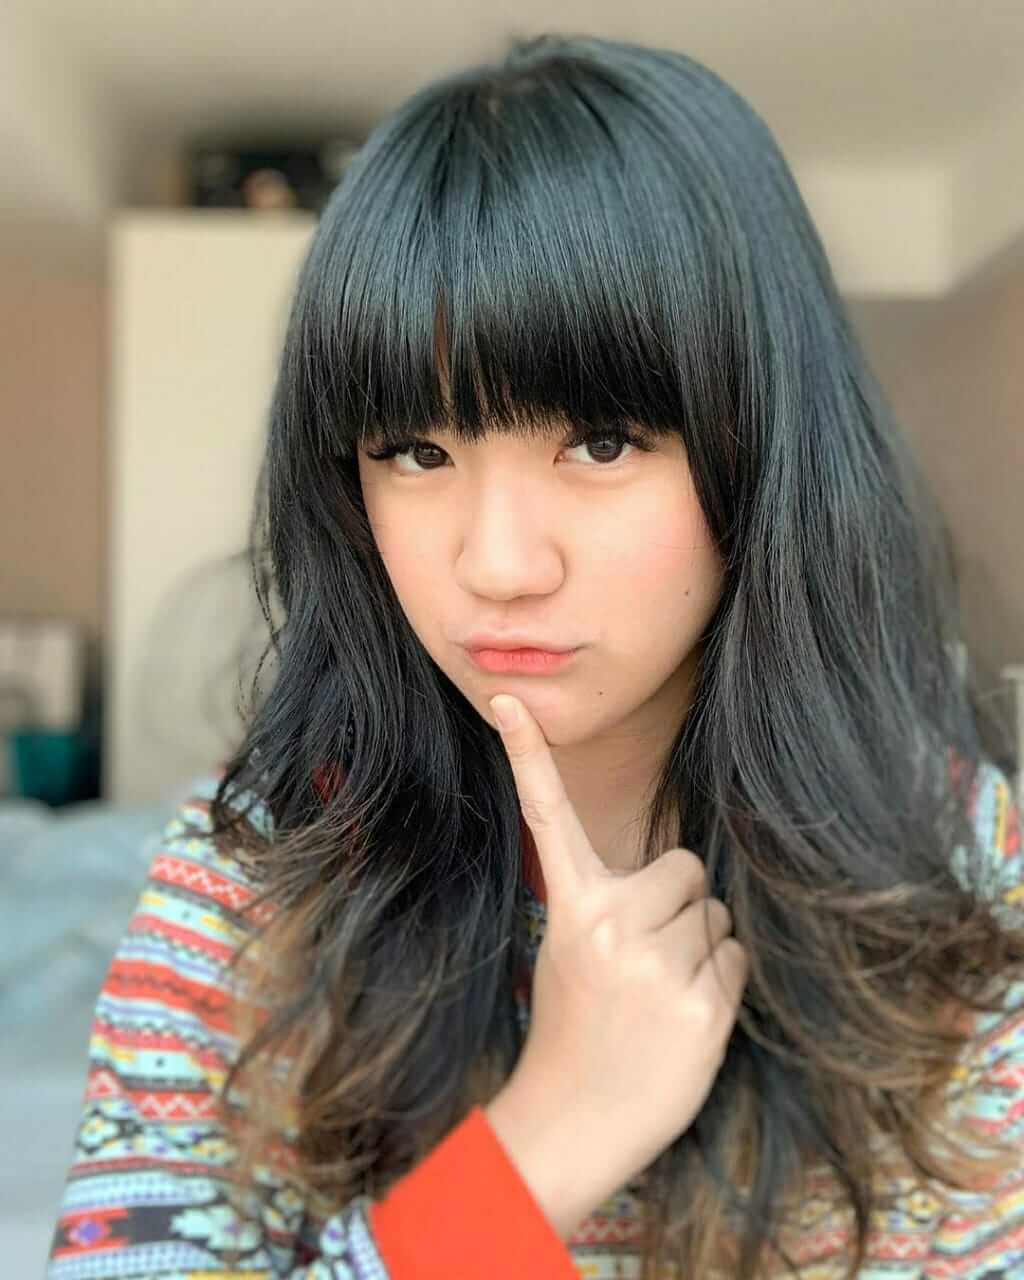 10 Potret Cindy Gulla, Eks JKT48 yang Jadi Brand Ambassador One Championship